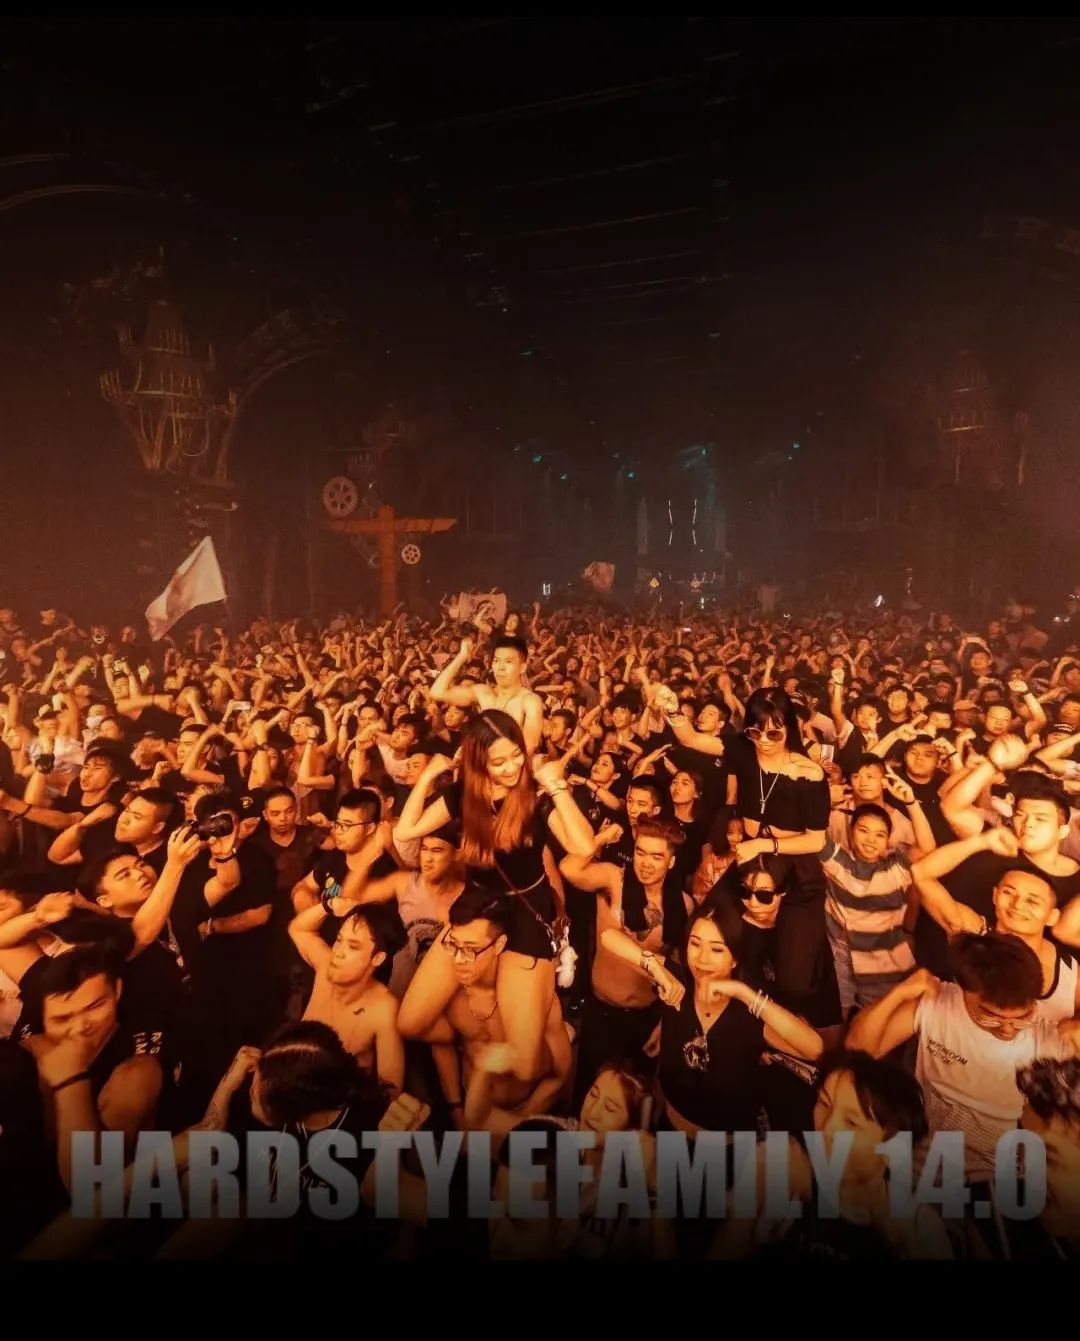 Hardstyle Family 22.0 | 挥手告别，最后的狂欢-佛山格莱美汇酒吧/Galame Club